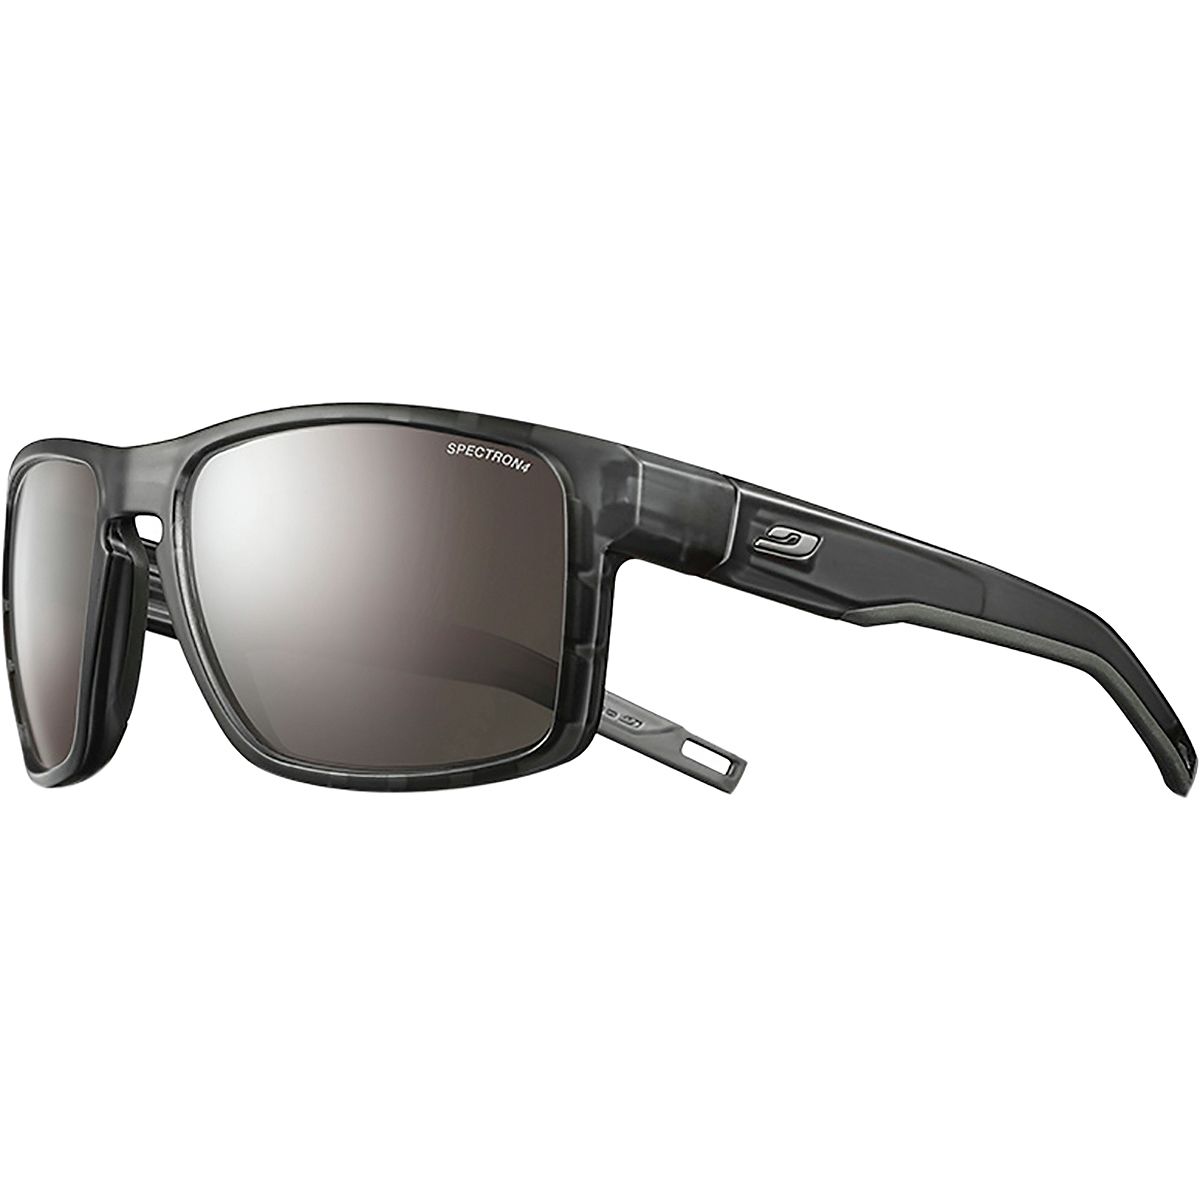 Julbo Shield Spectron 4 Sunglasses Black/Black/Gun-Spectron 4 Brown, One Size - Men's